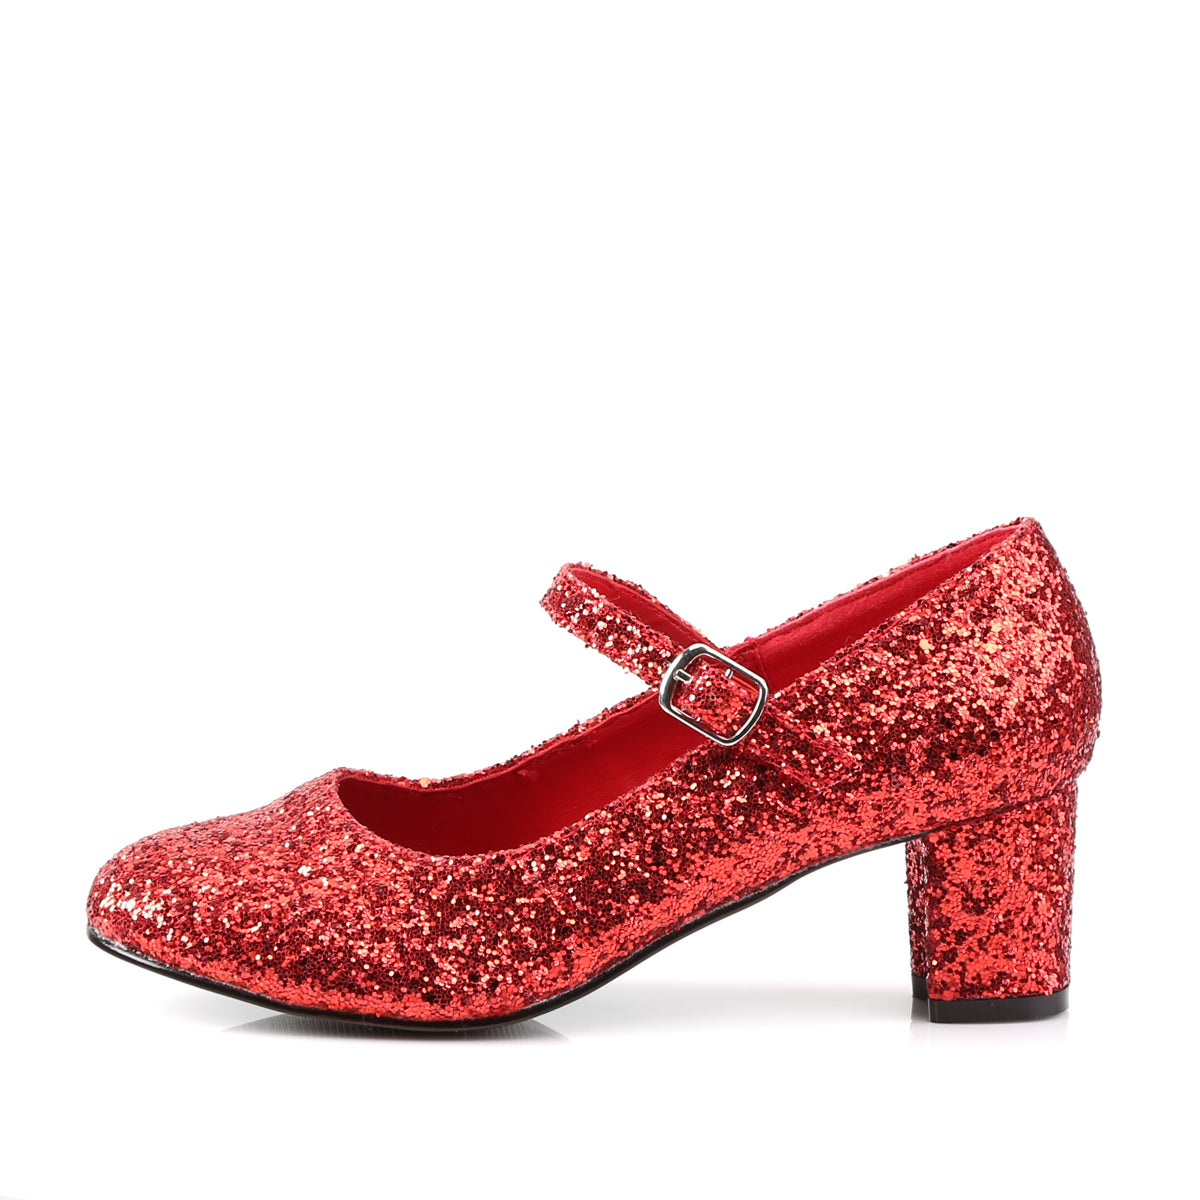 SCHOOLGIRL-50G 2 Inch Heel Red Glitter Costume Shoes Funtasma Costume Shoes 